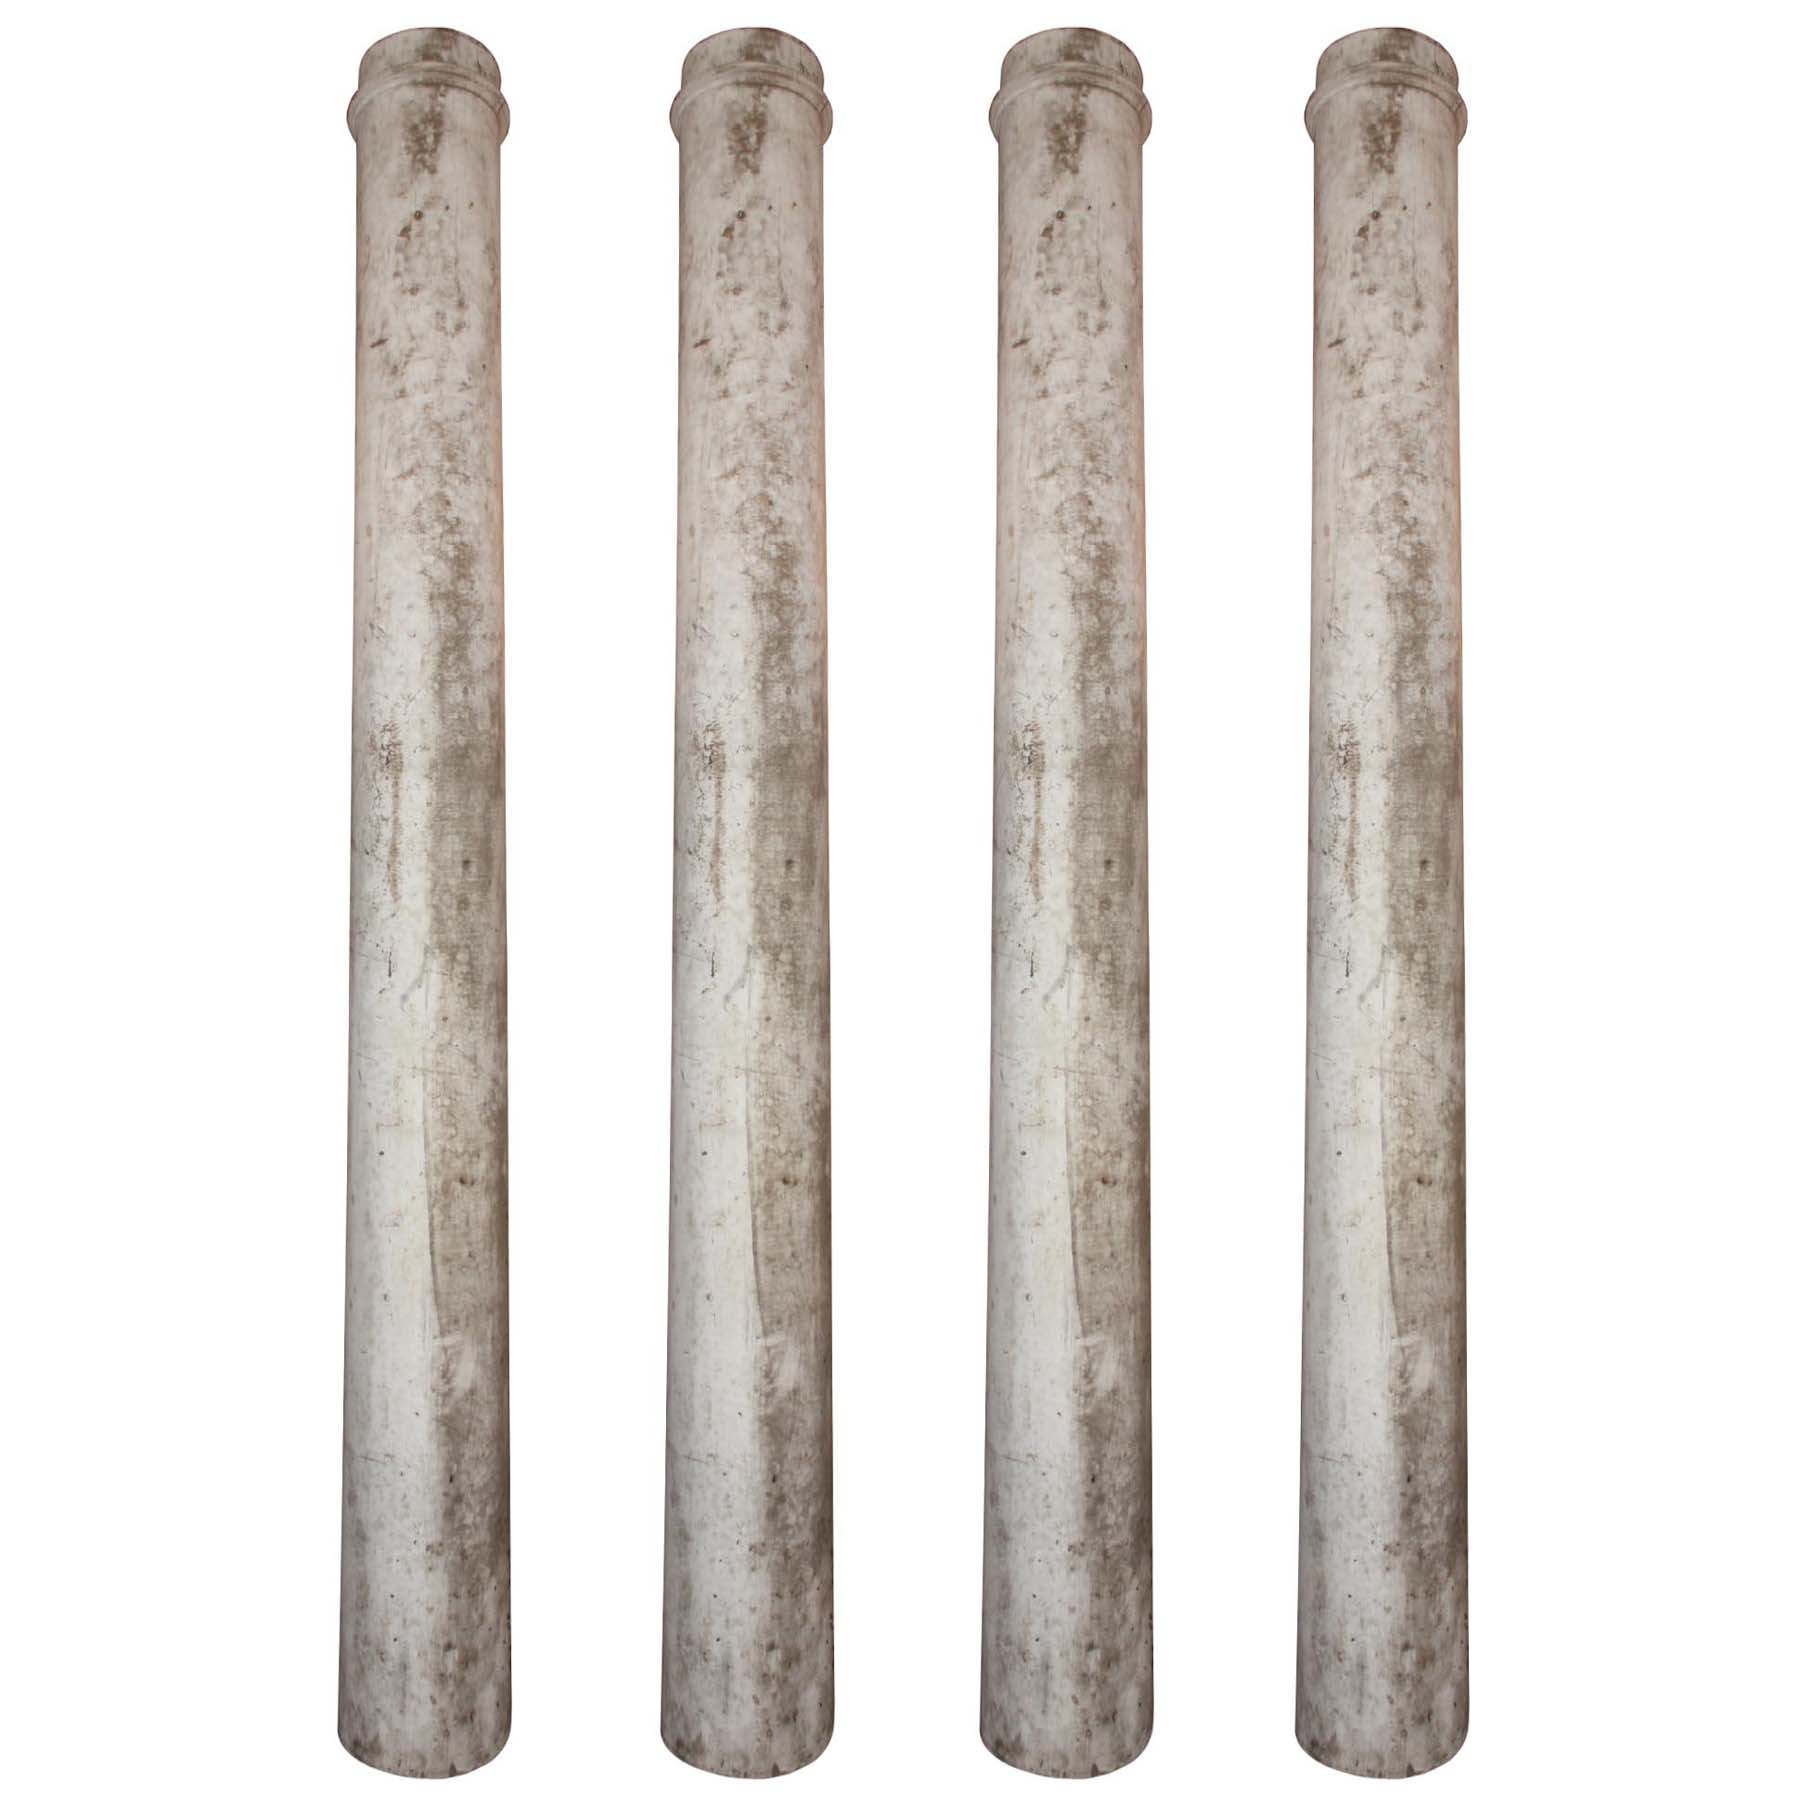 Substantial Antique Columns matching